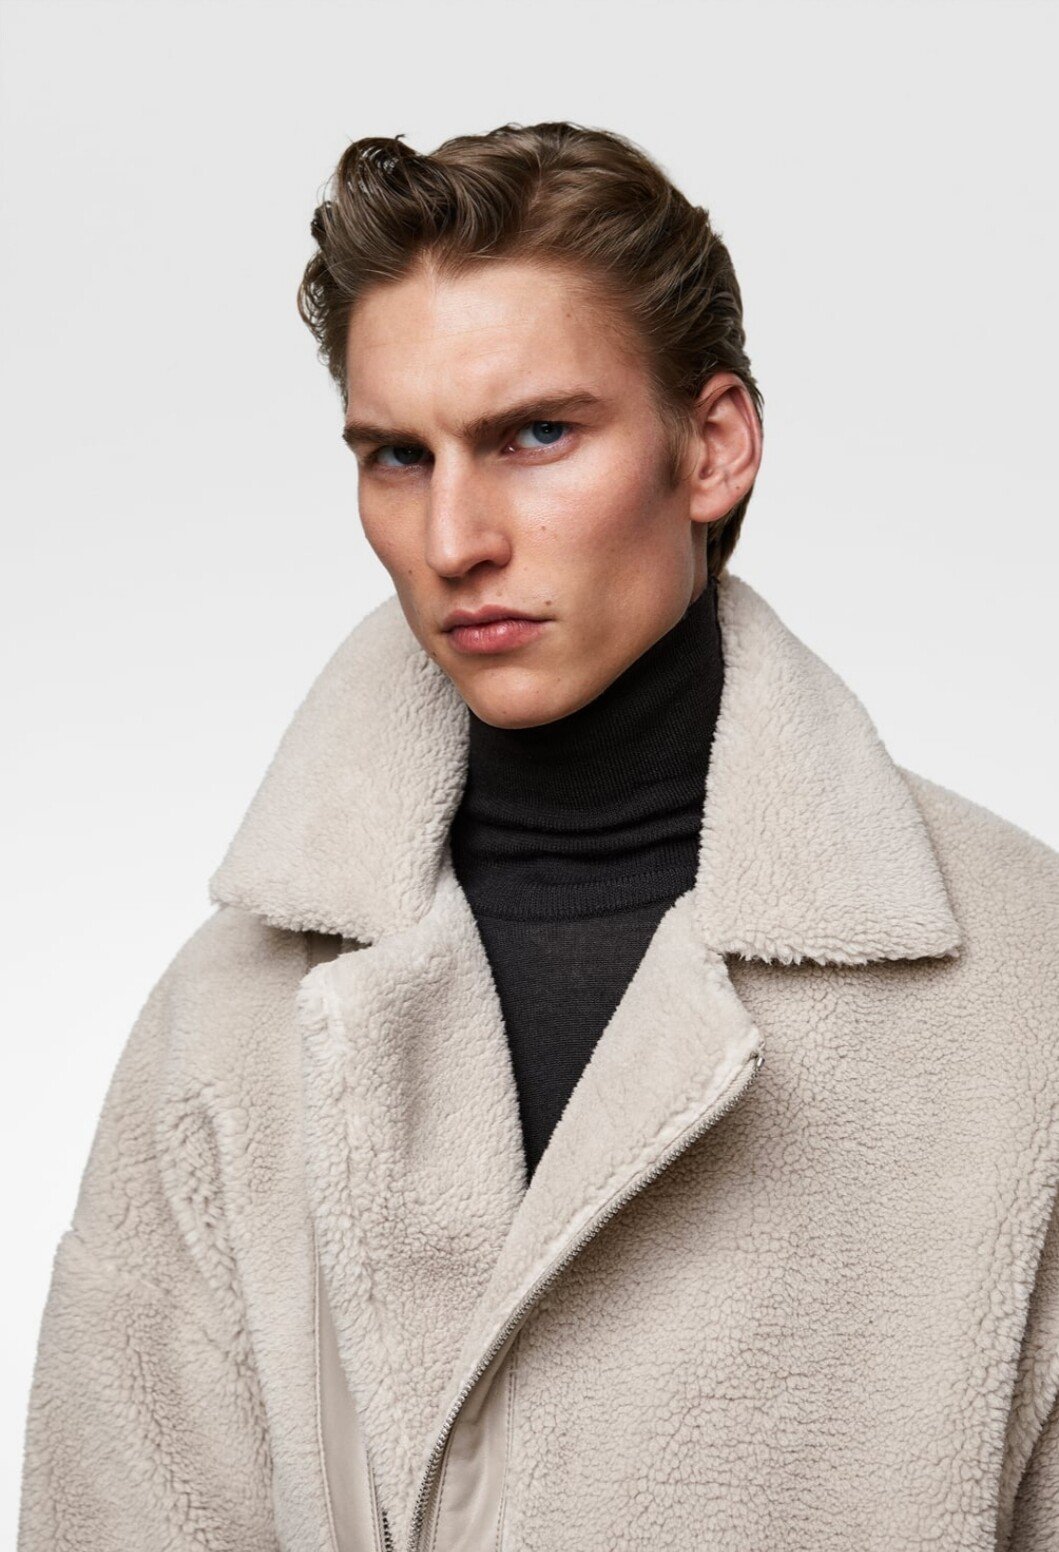 Zara male model, whats his name 